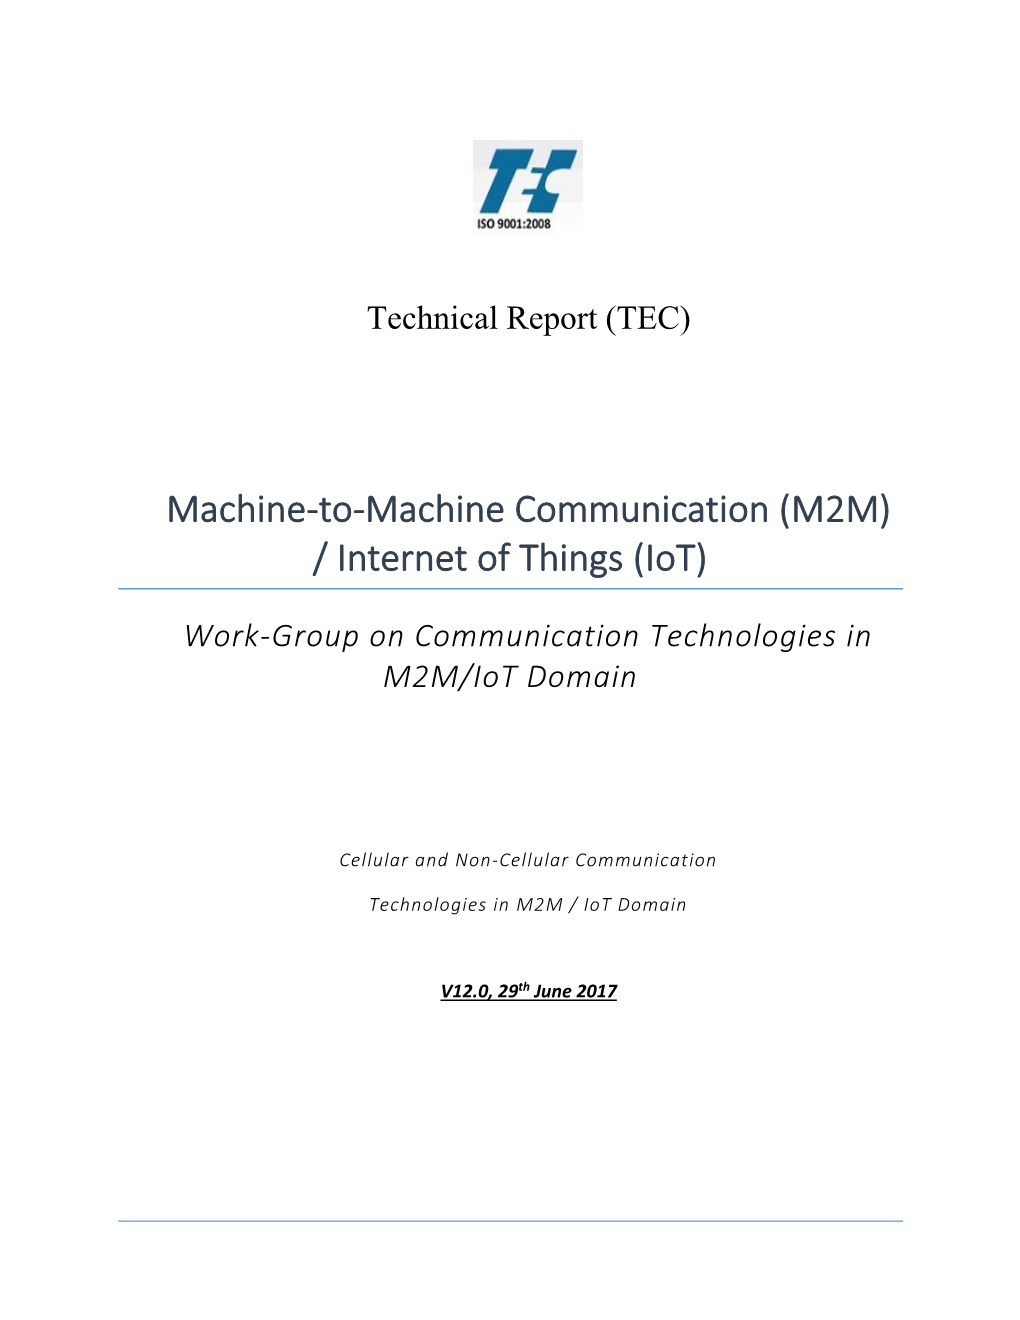 Machine-To-Machine Communication (M2M) / Internet of Things (Iot)